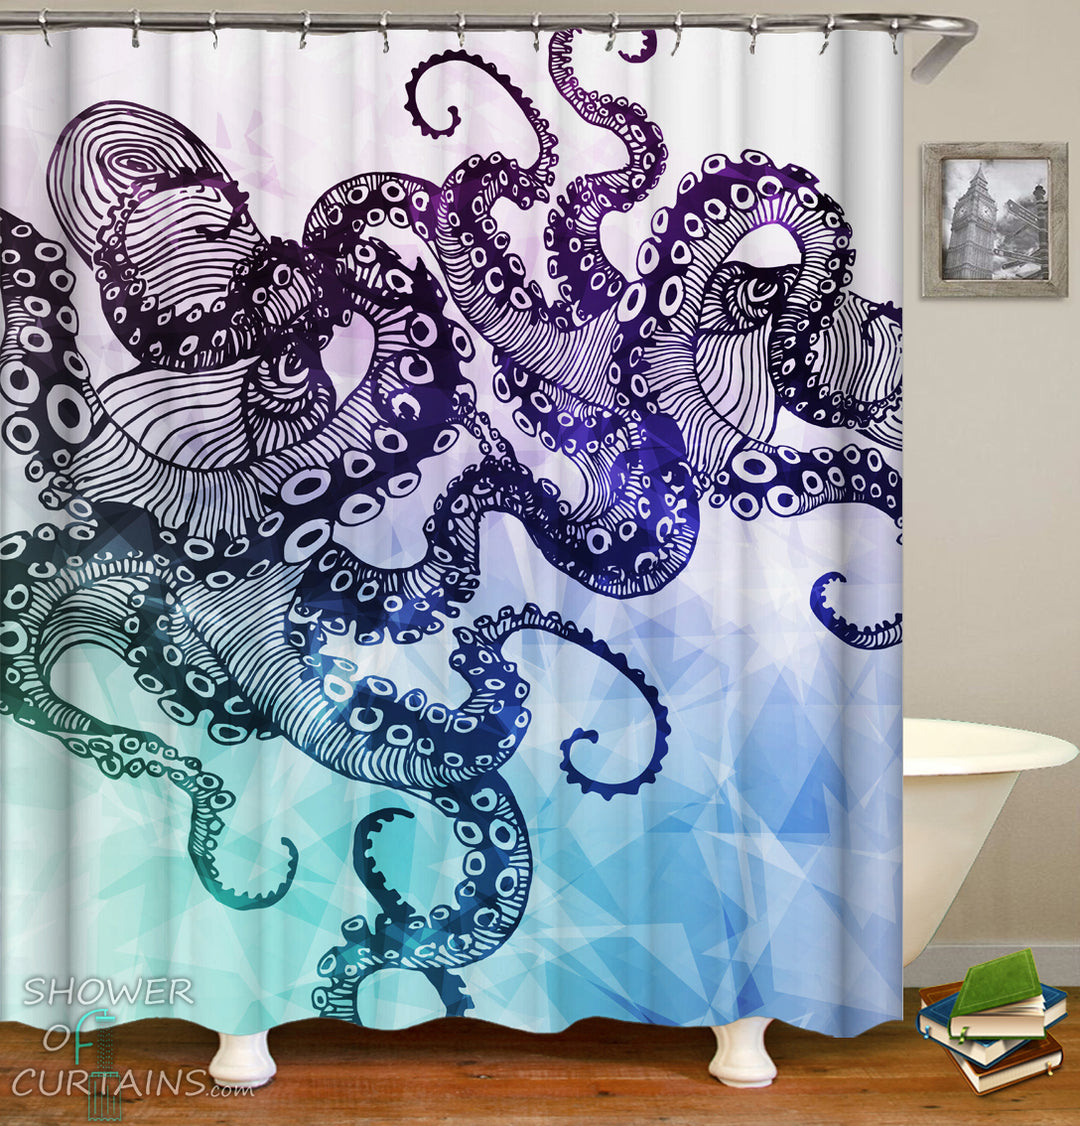 Kraken Shower Curtain of Purple Shades Kraken's Arms